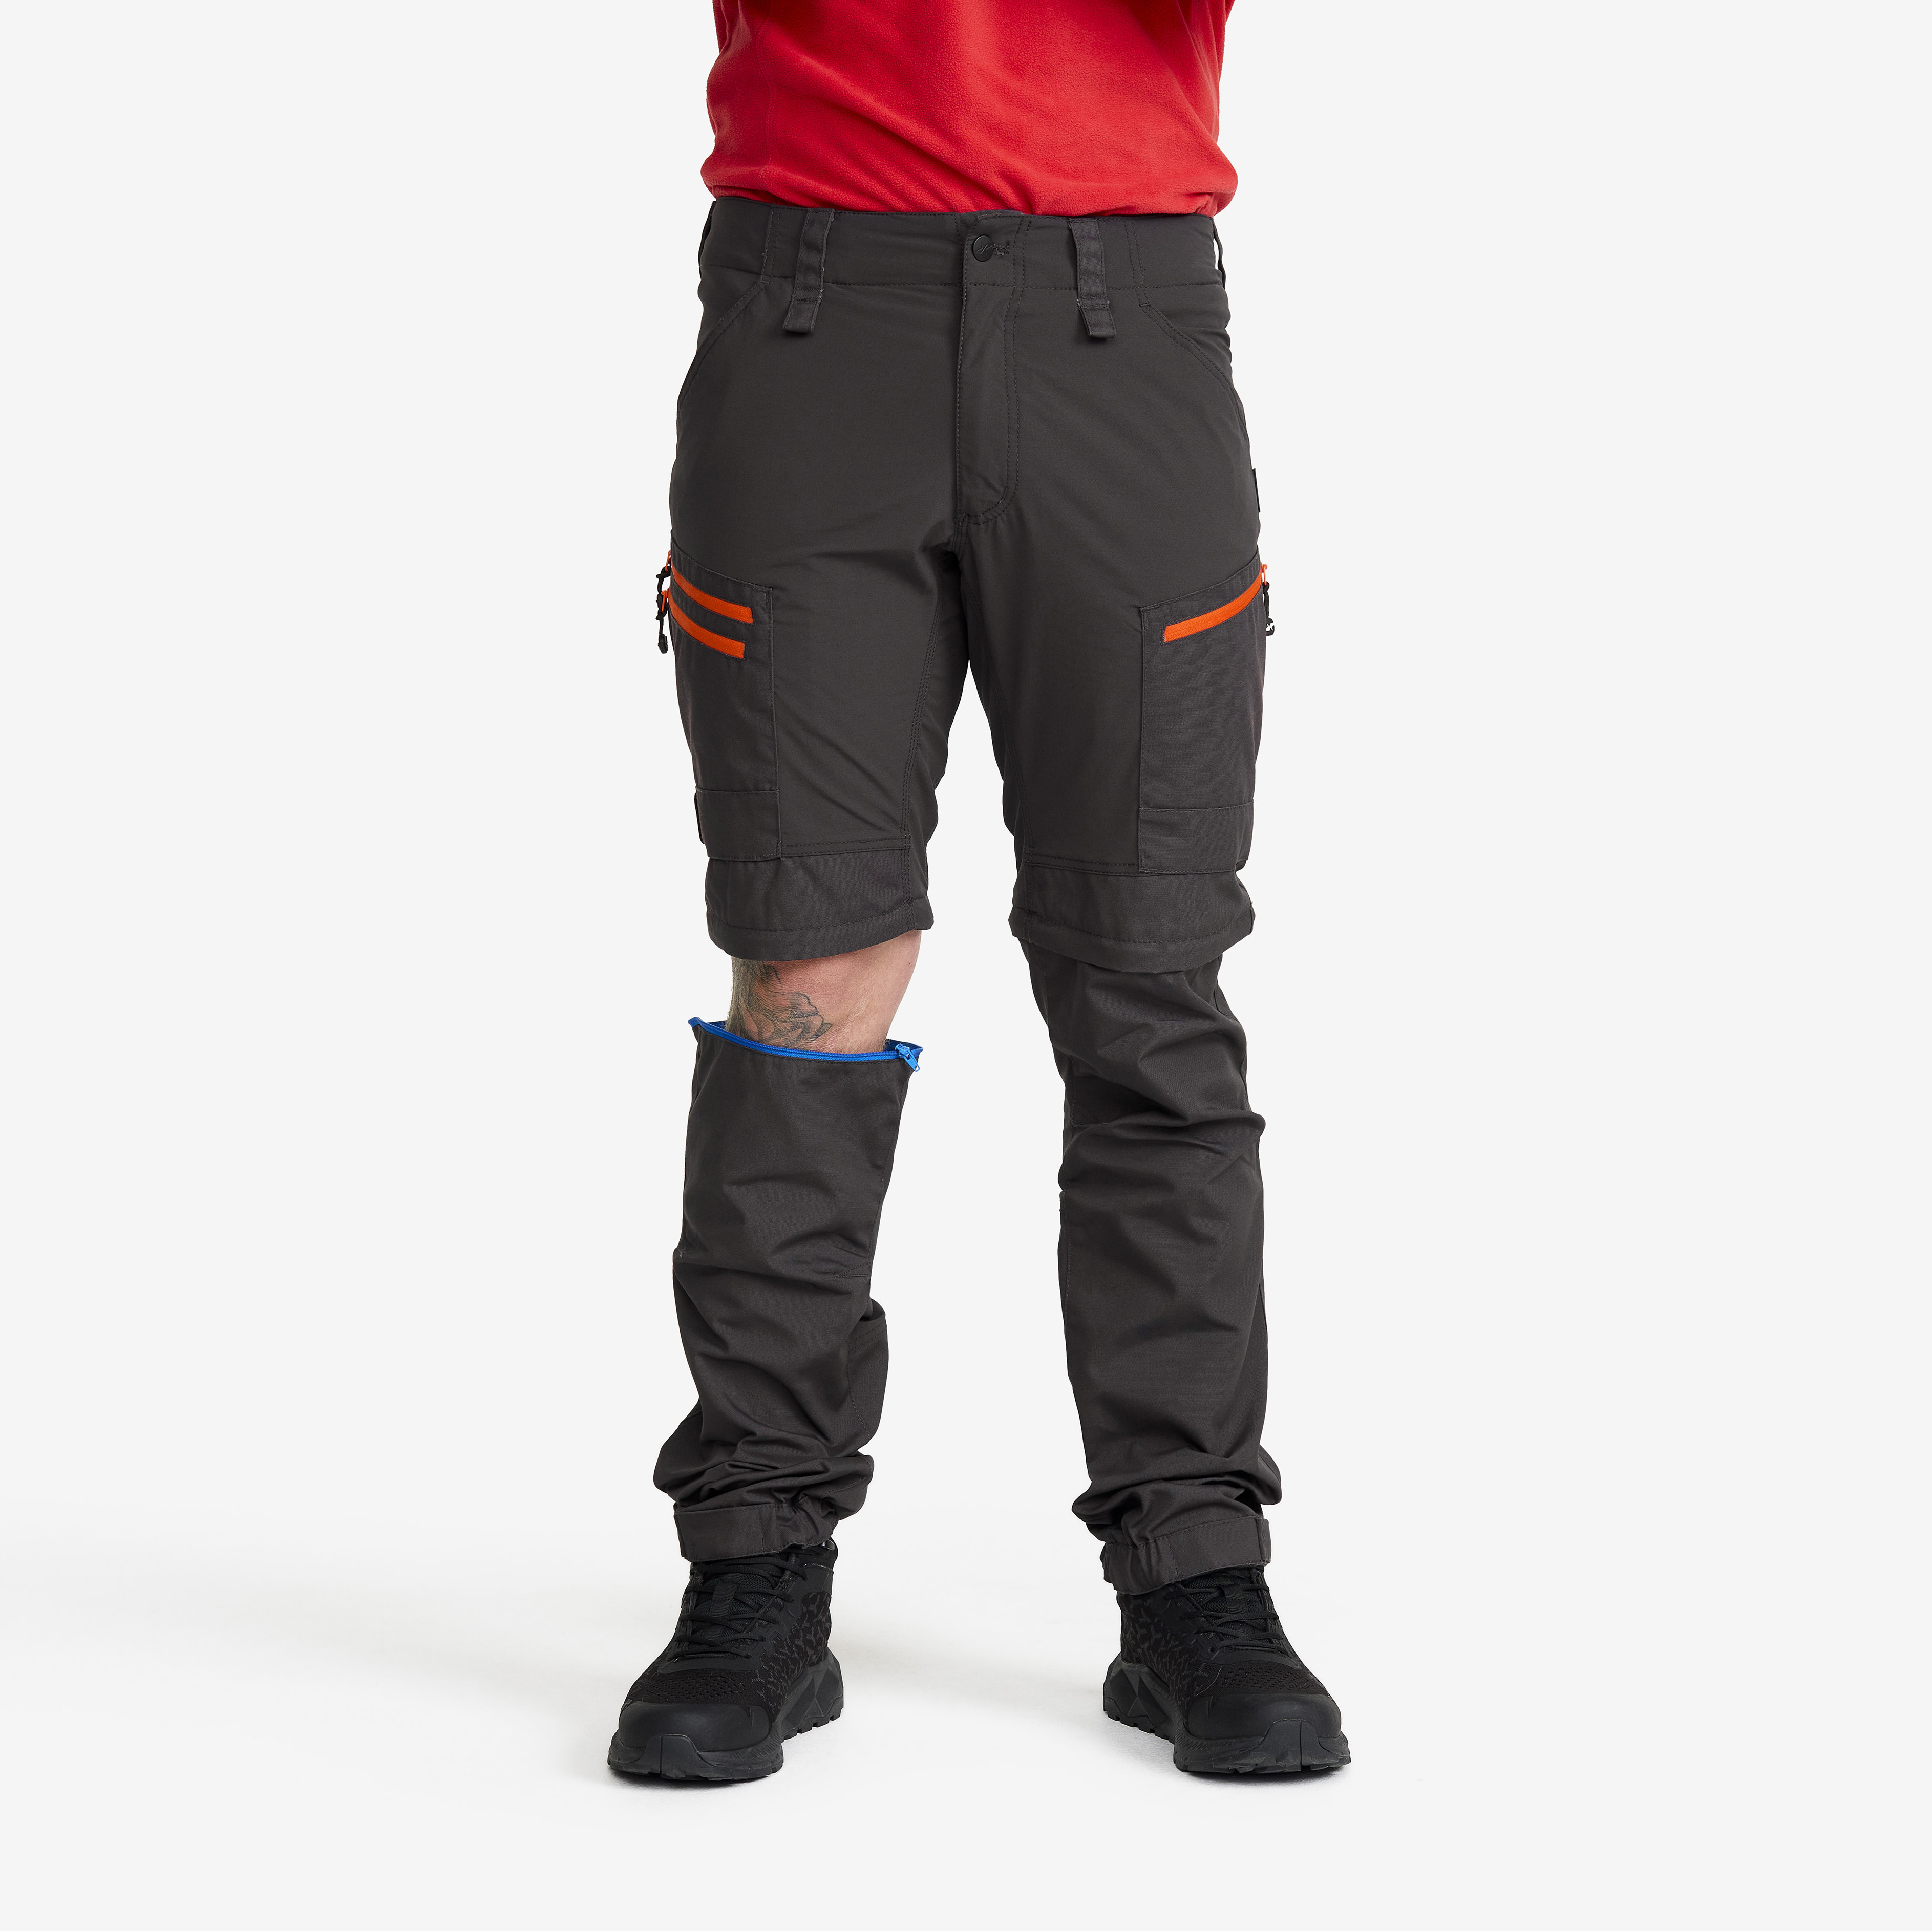 RVRC GP Pro Zip-off hiking trousers for men in dark grey